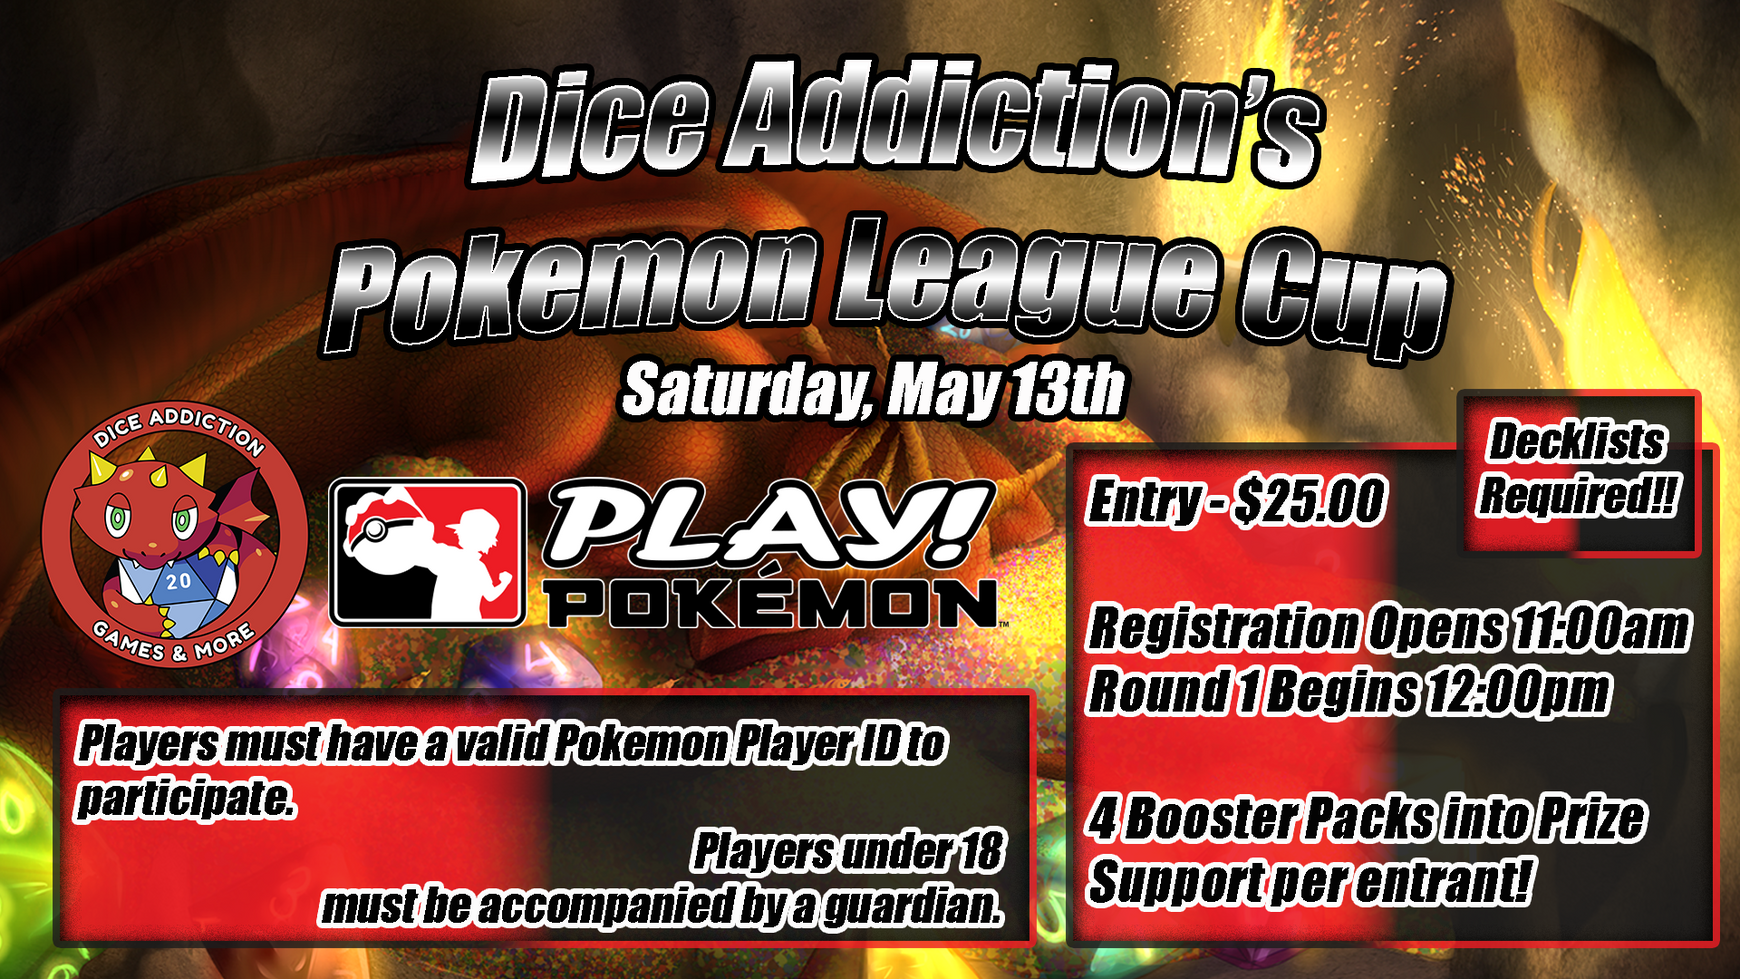 Pokemon League Cup Tournament @ Dice Addiction!